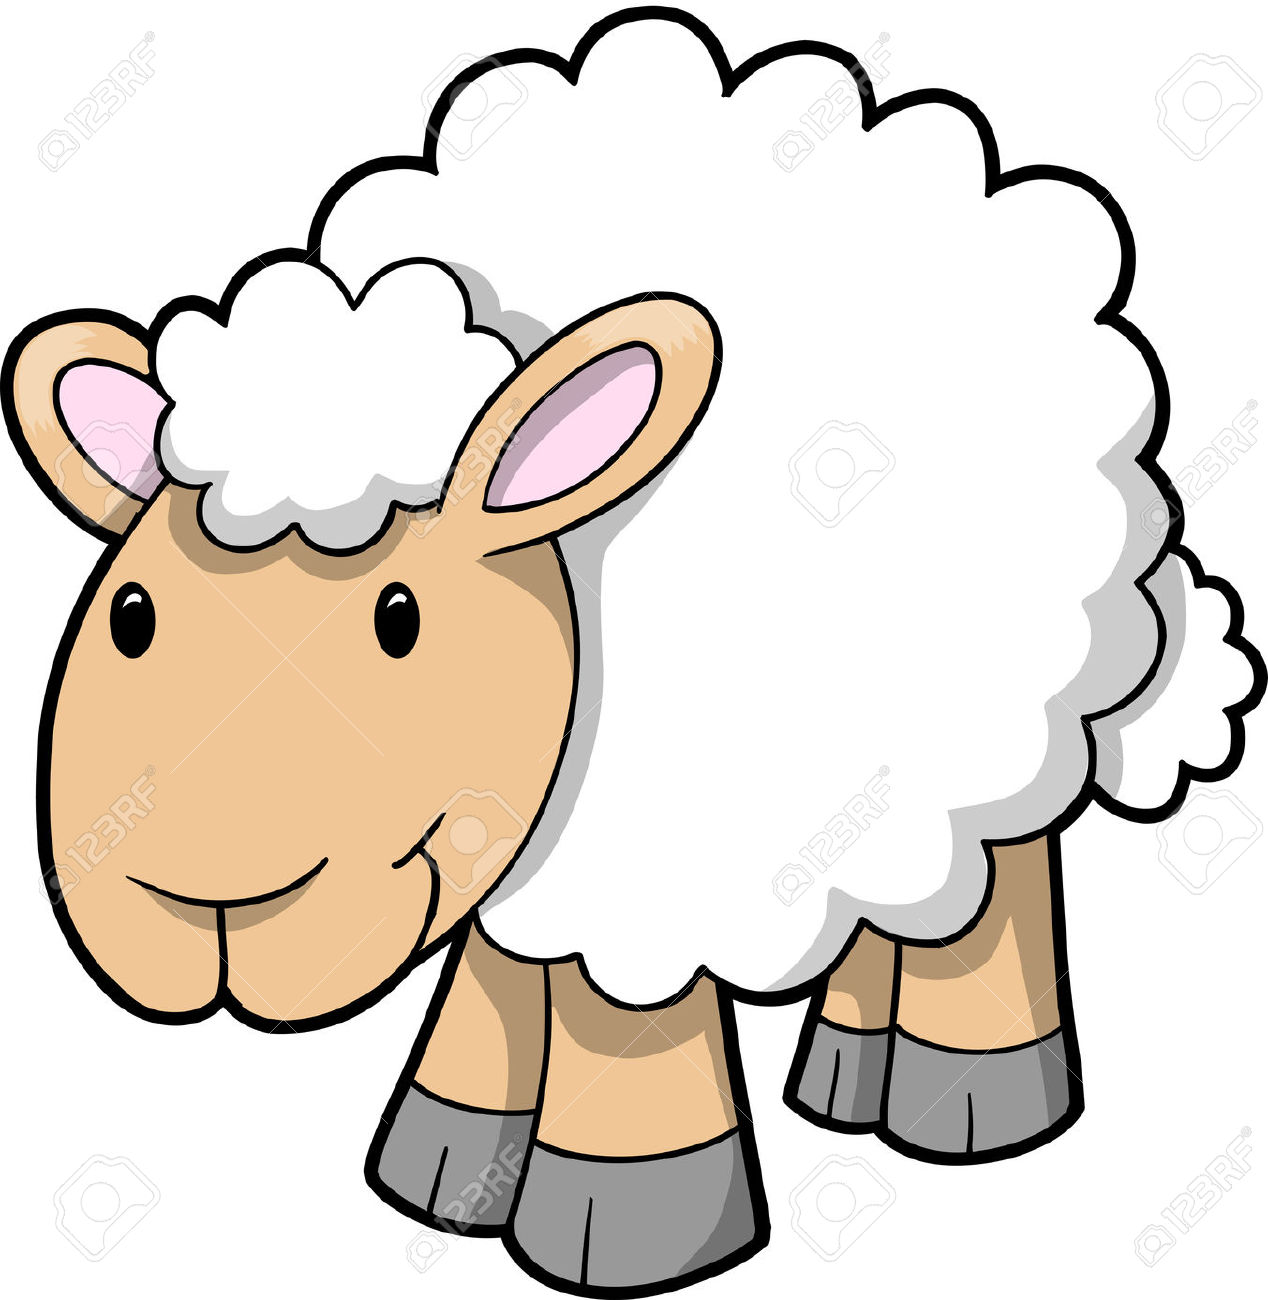 Download - Cute Sheep Clipart